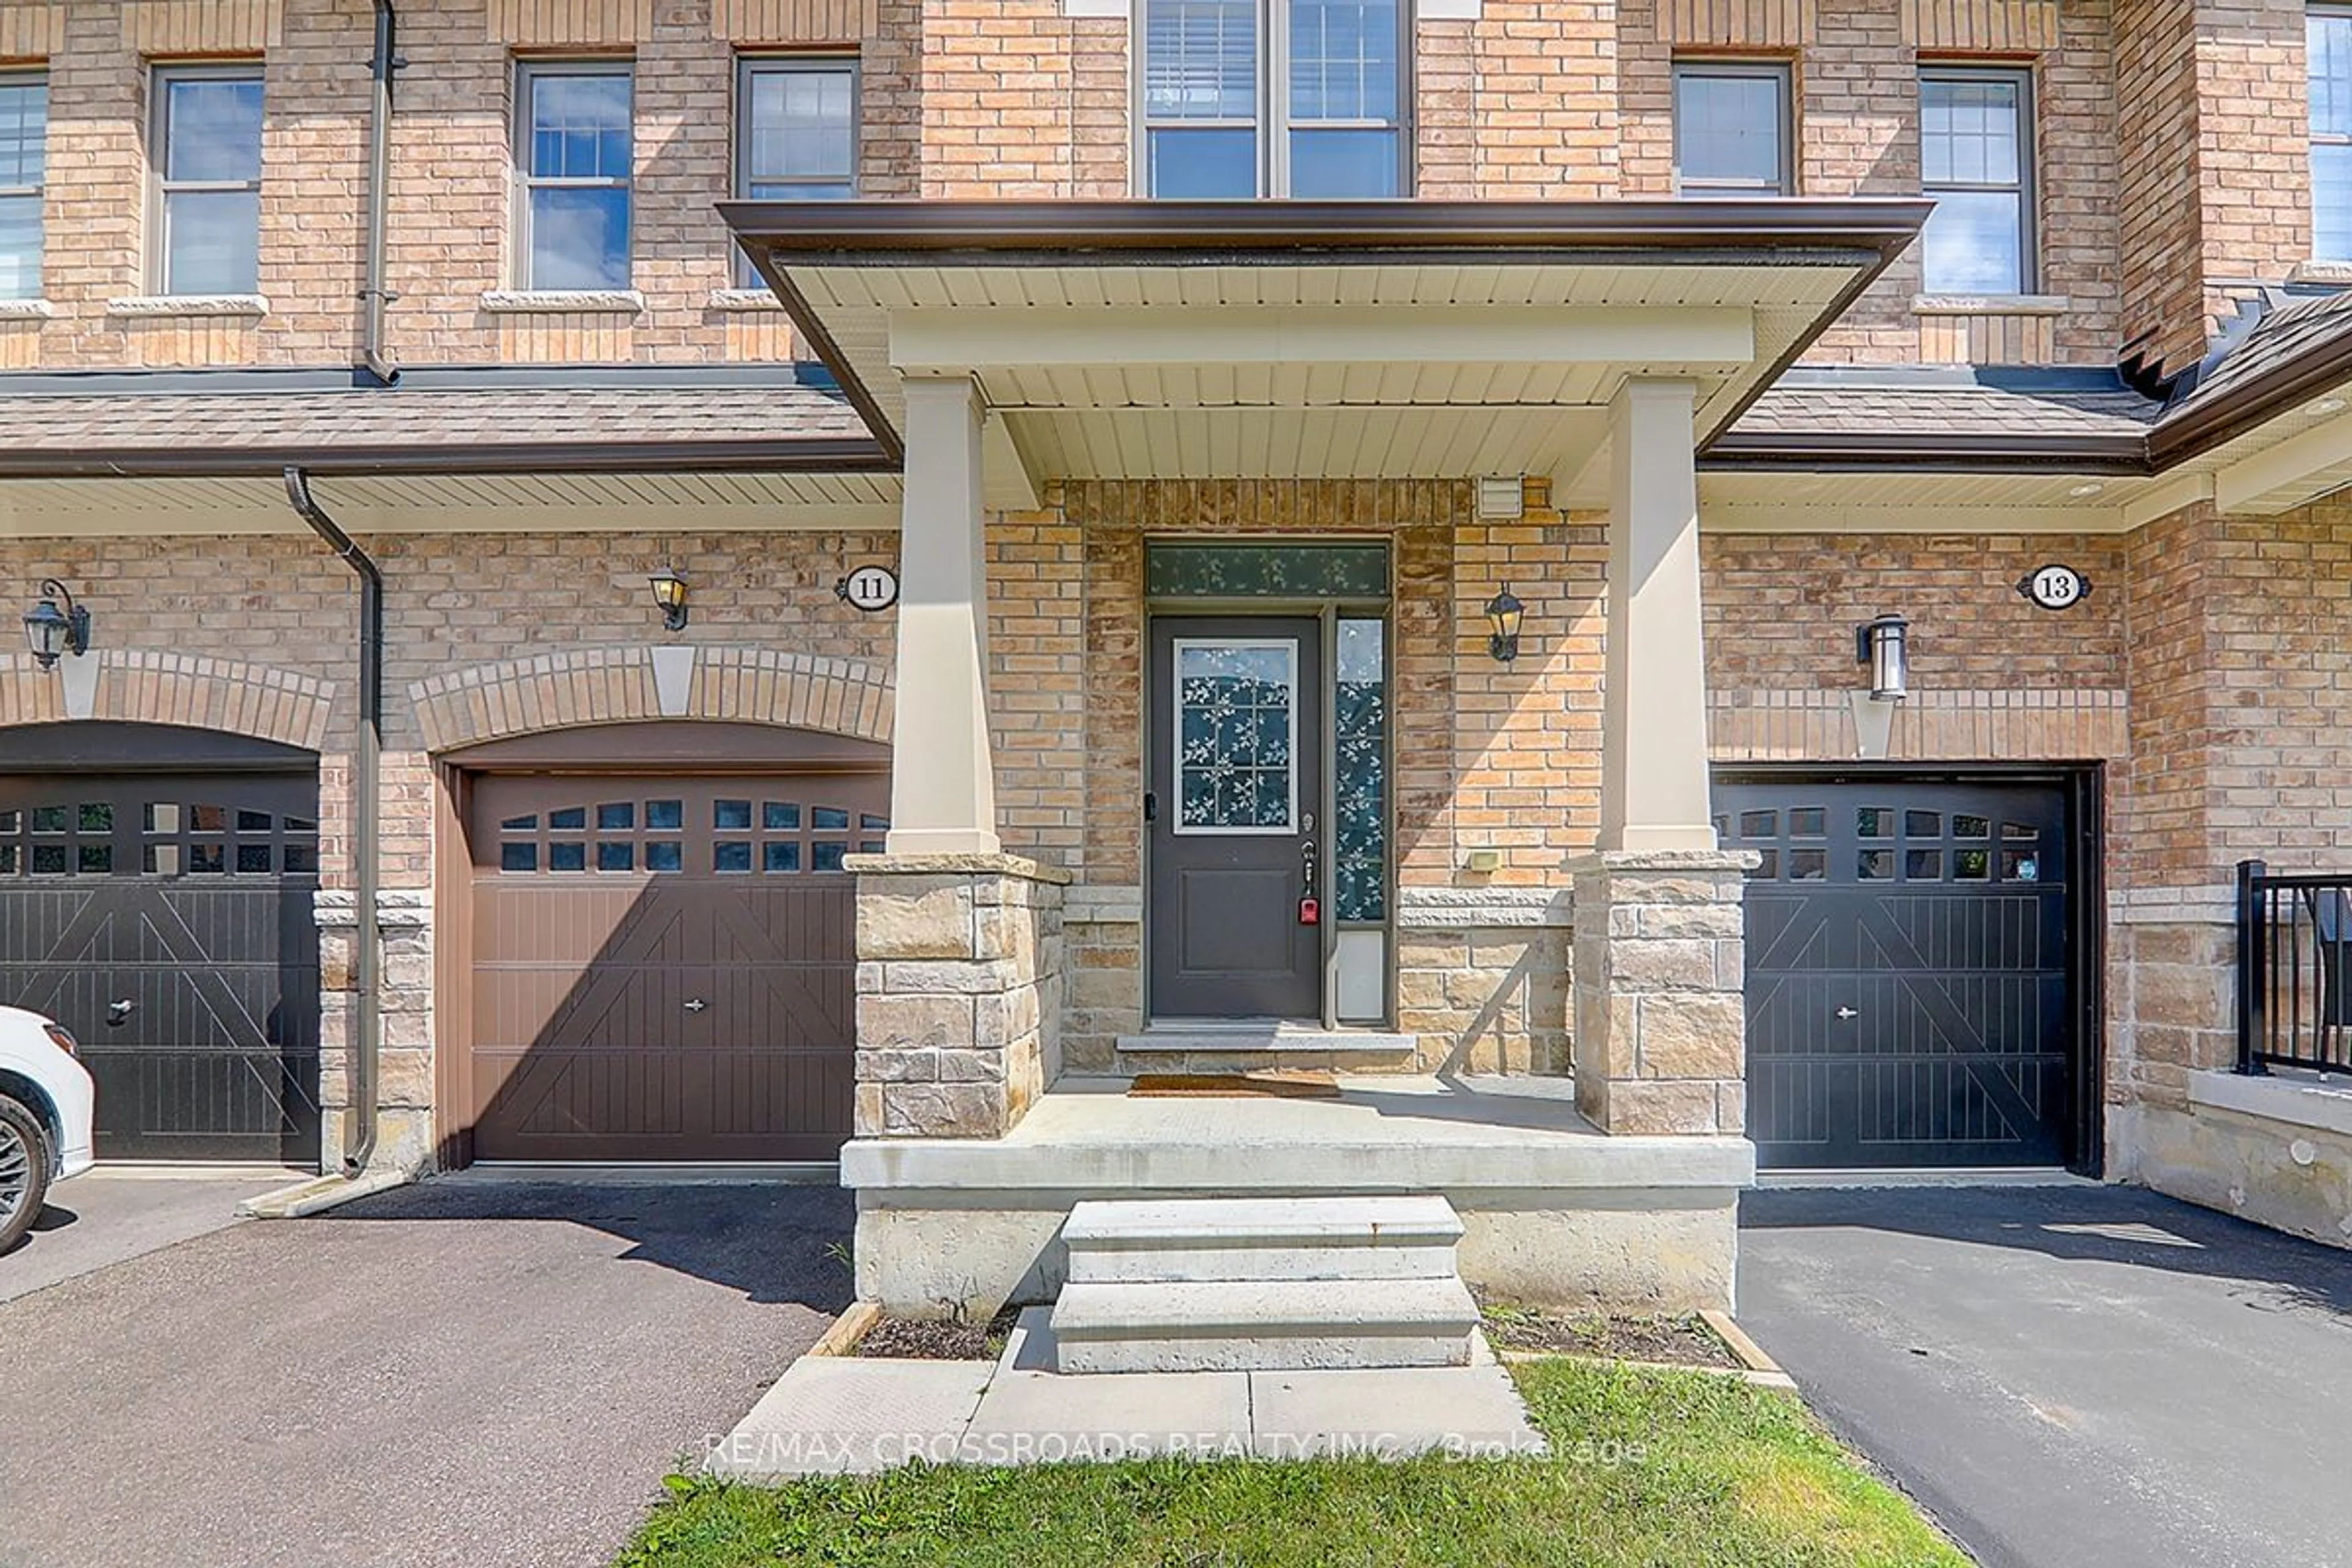 Home with brick exterior material for 11 Morra Ave, Caledon Ontario L7E 4K5